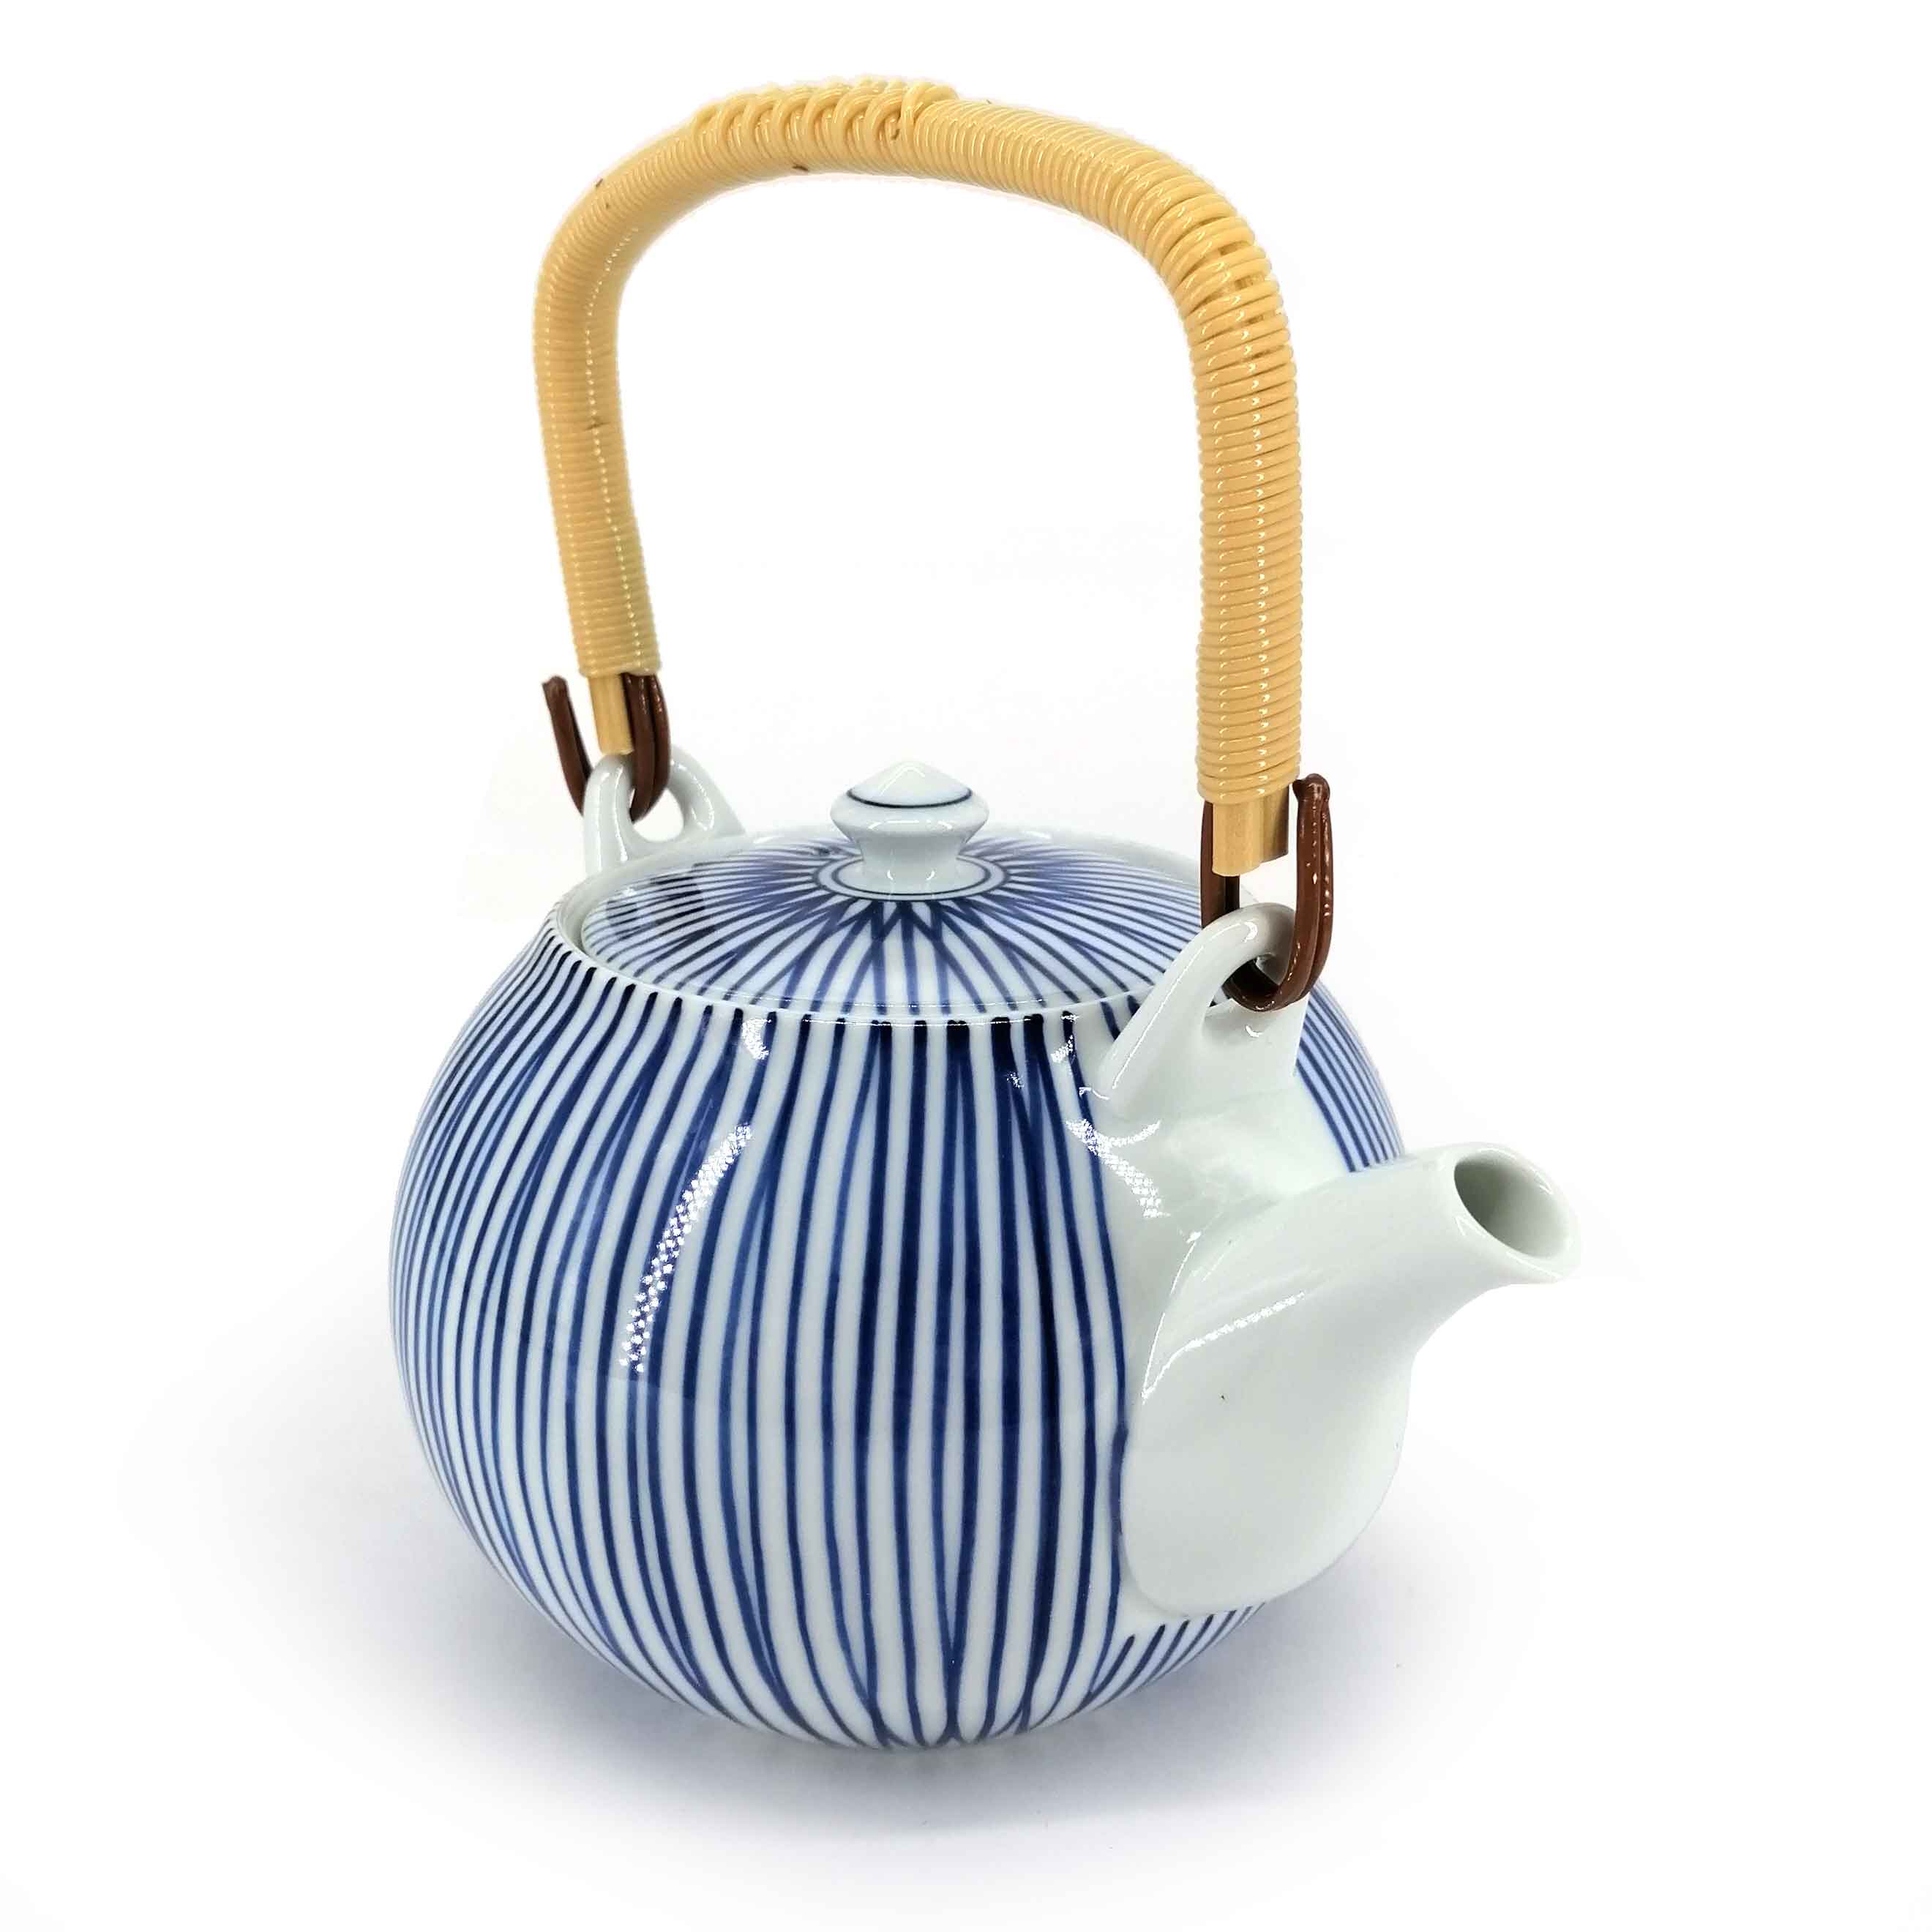 SMALL CERAMIC TEAPOT | The Tea Can Company